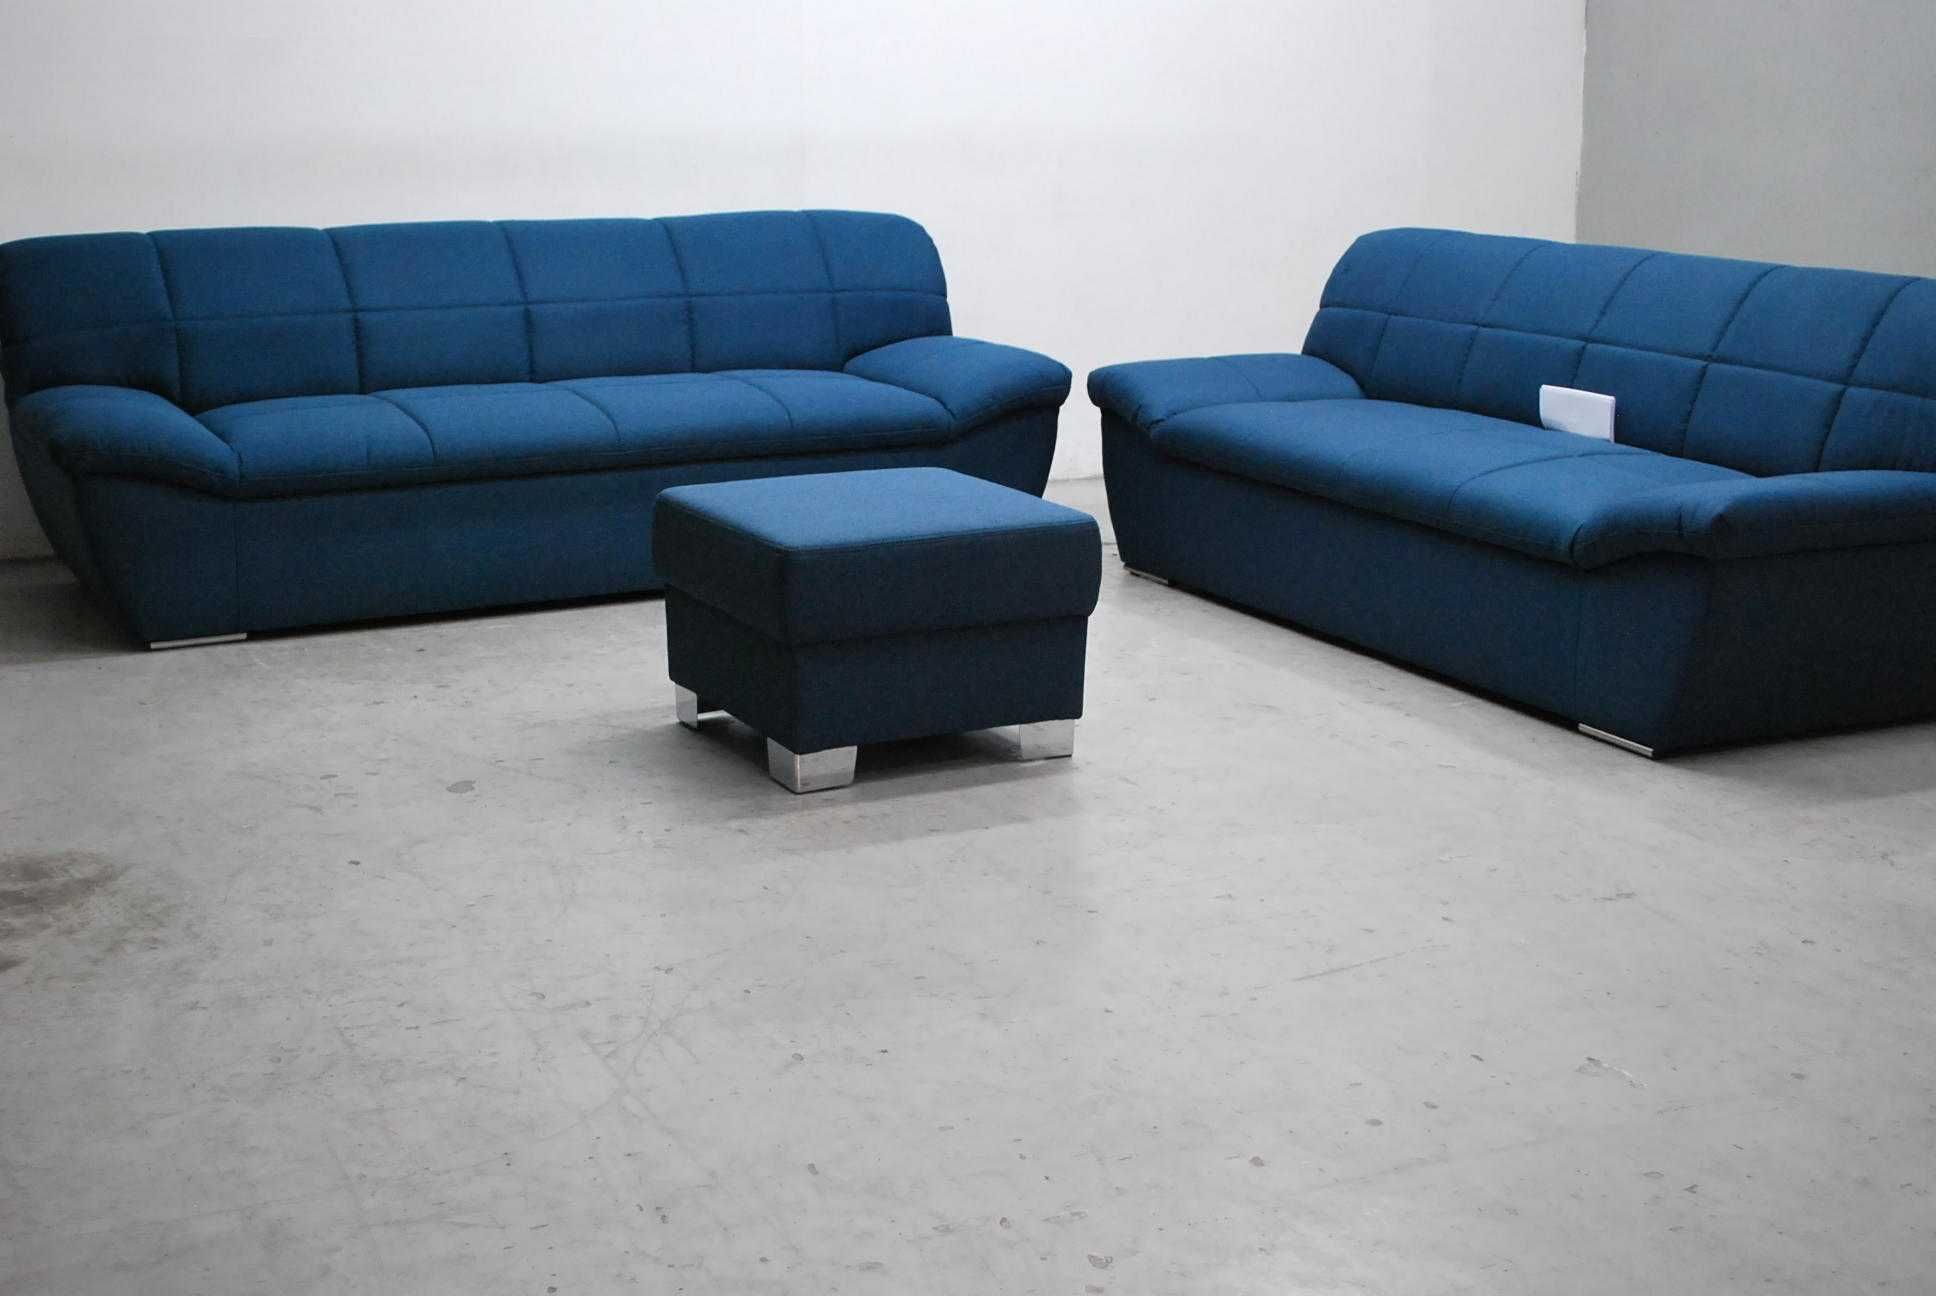 RRK nowy komplet 3+2+ pufa kanapy ZESTAW sofa